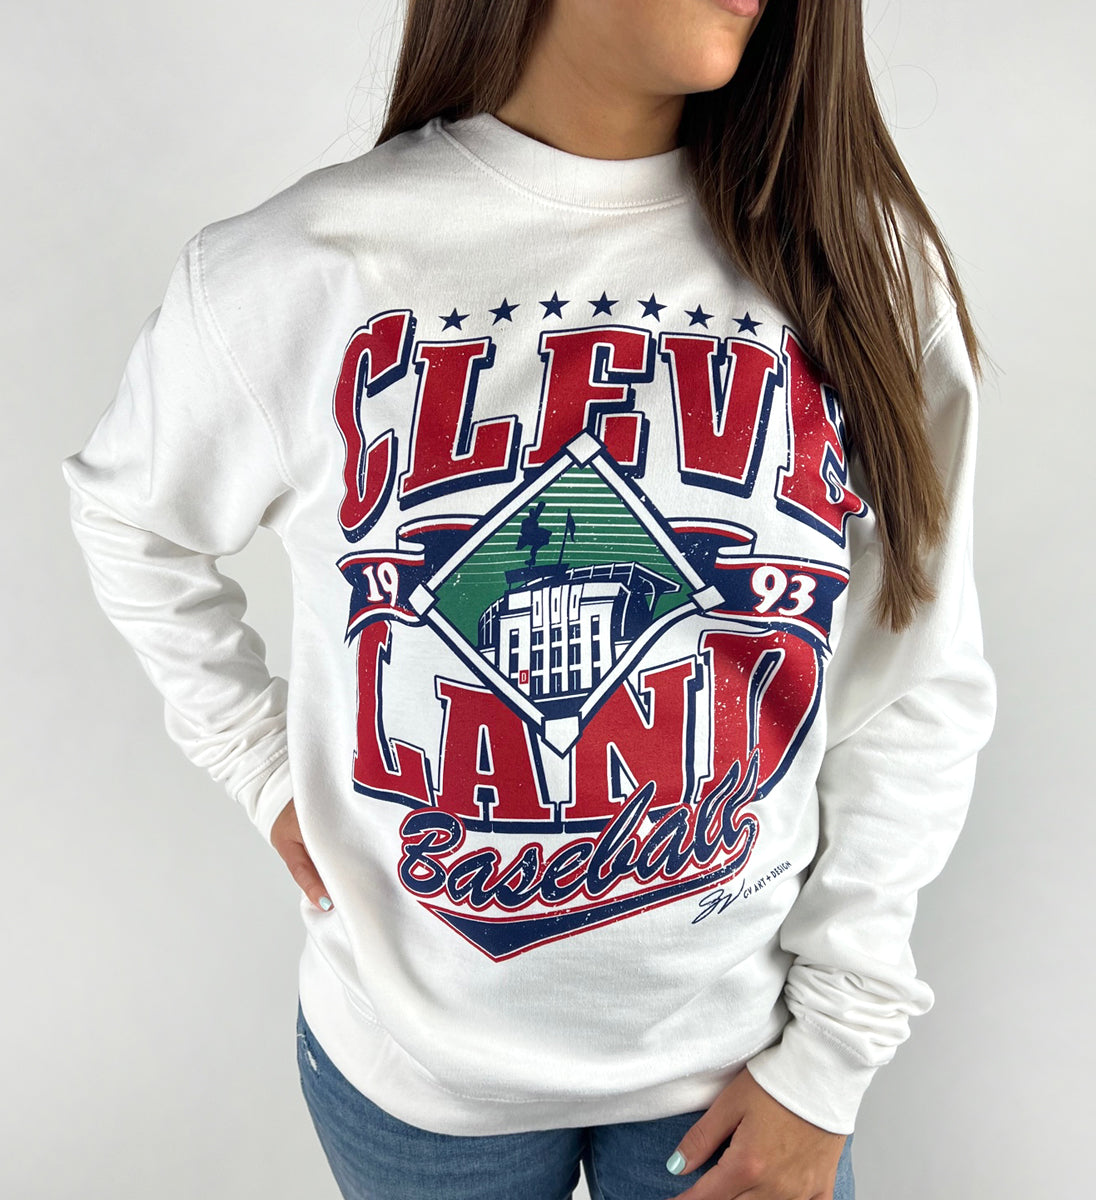 Vintage Cleveland Indians Sweater